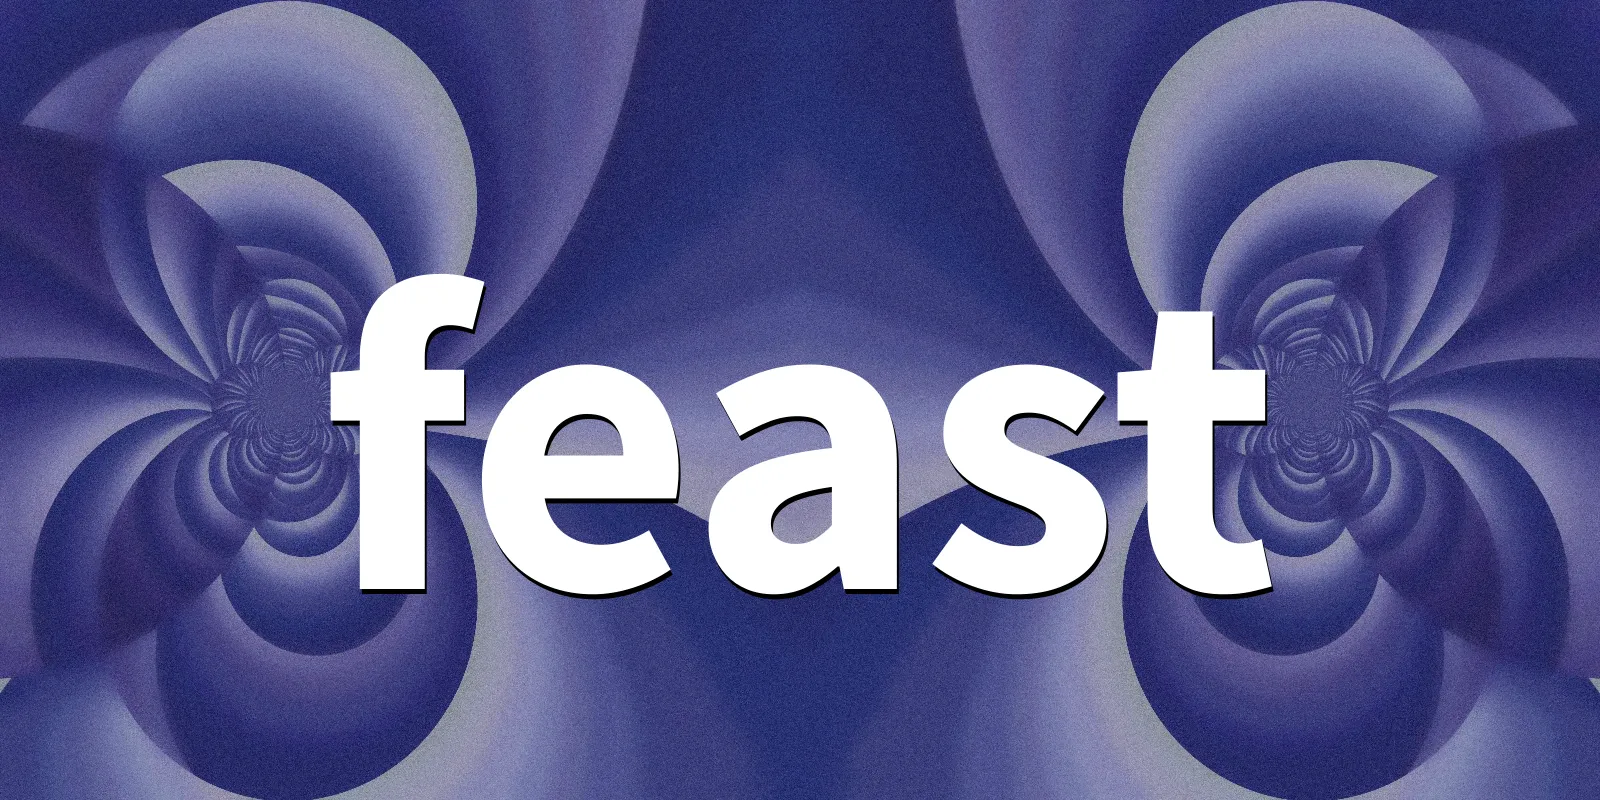 /pkg/f/feast/feast-banner.webp